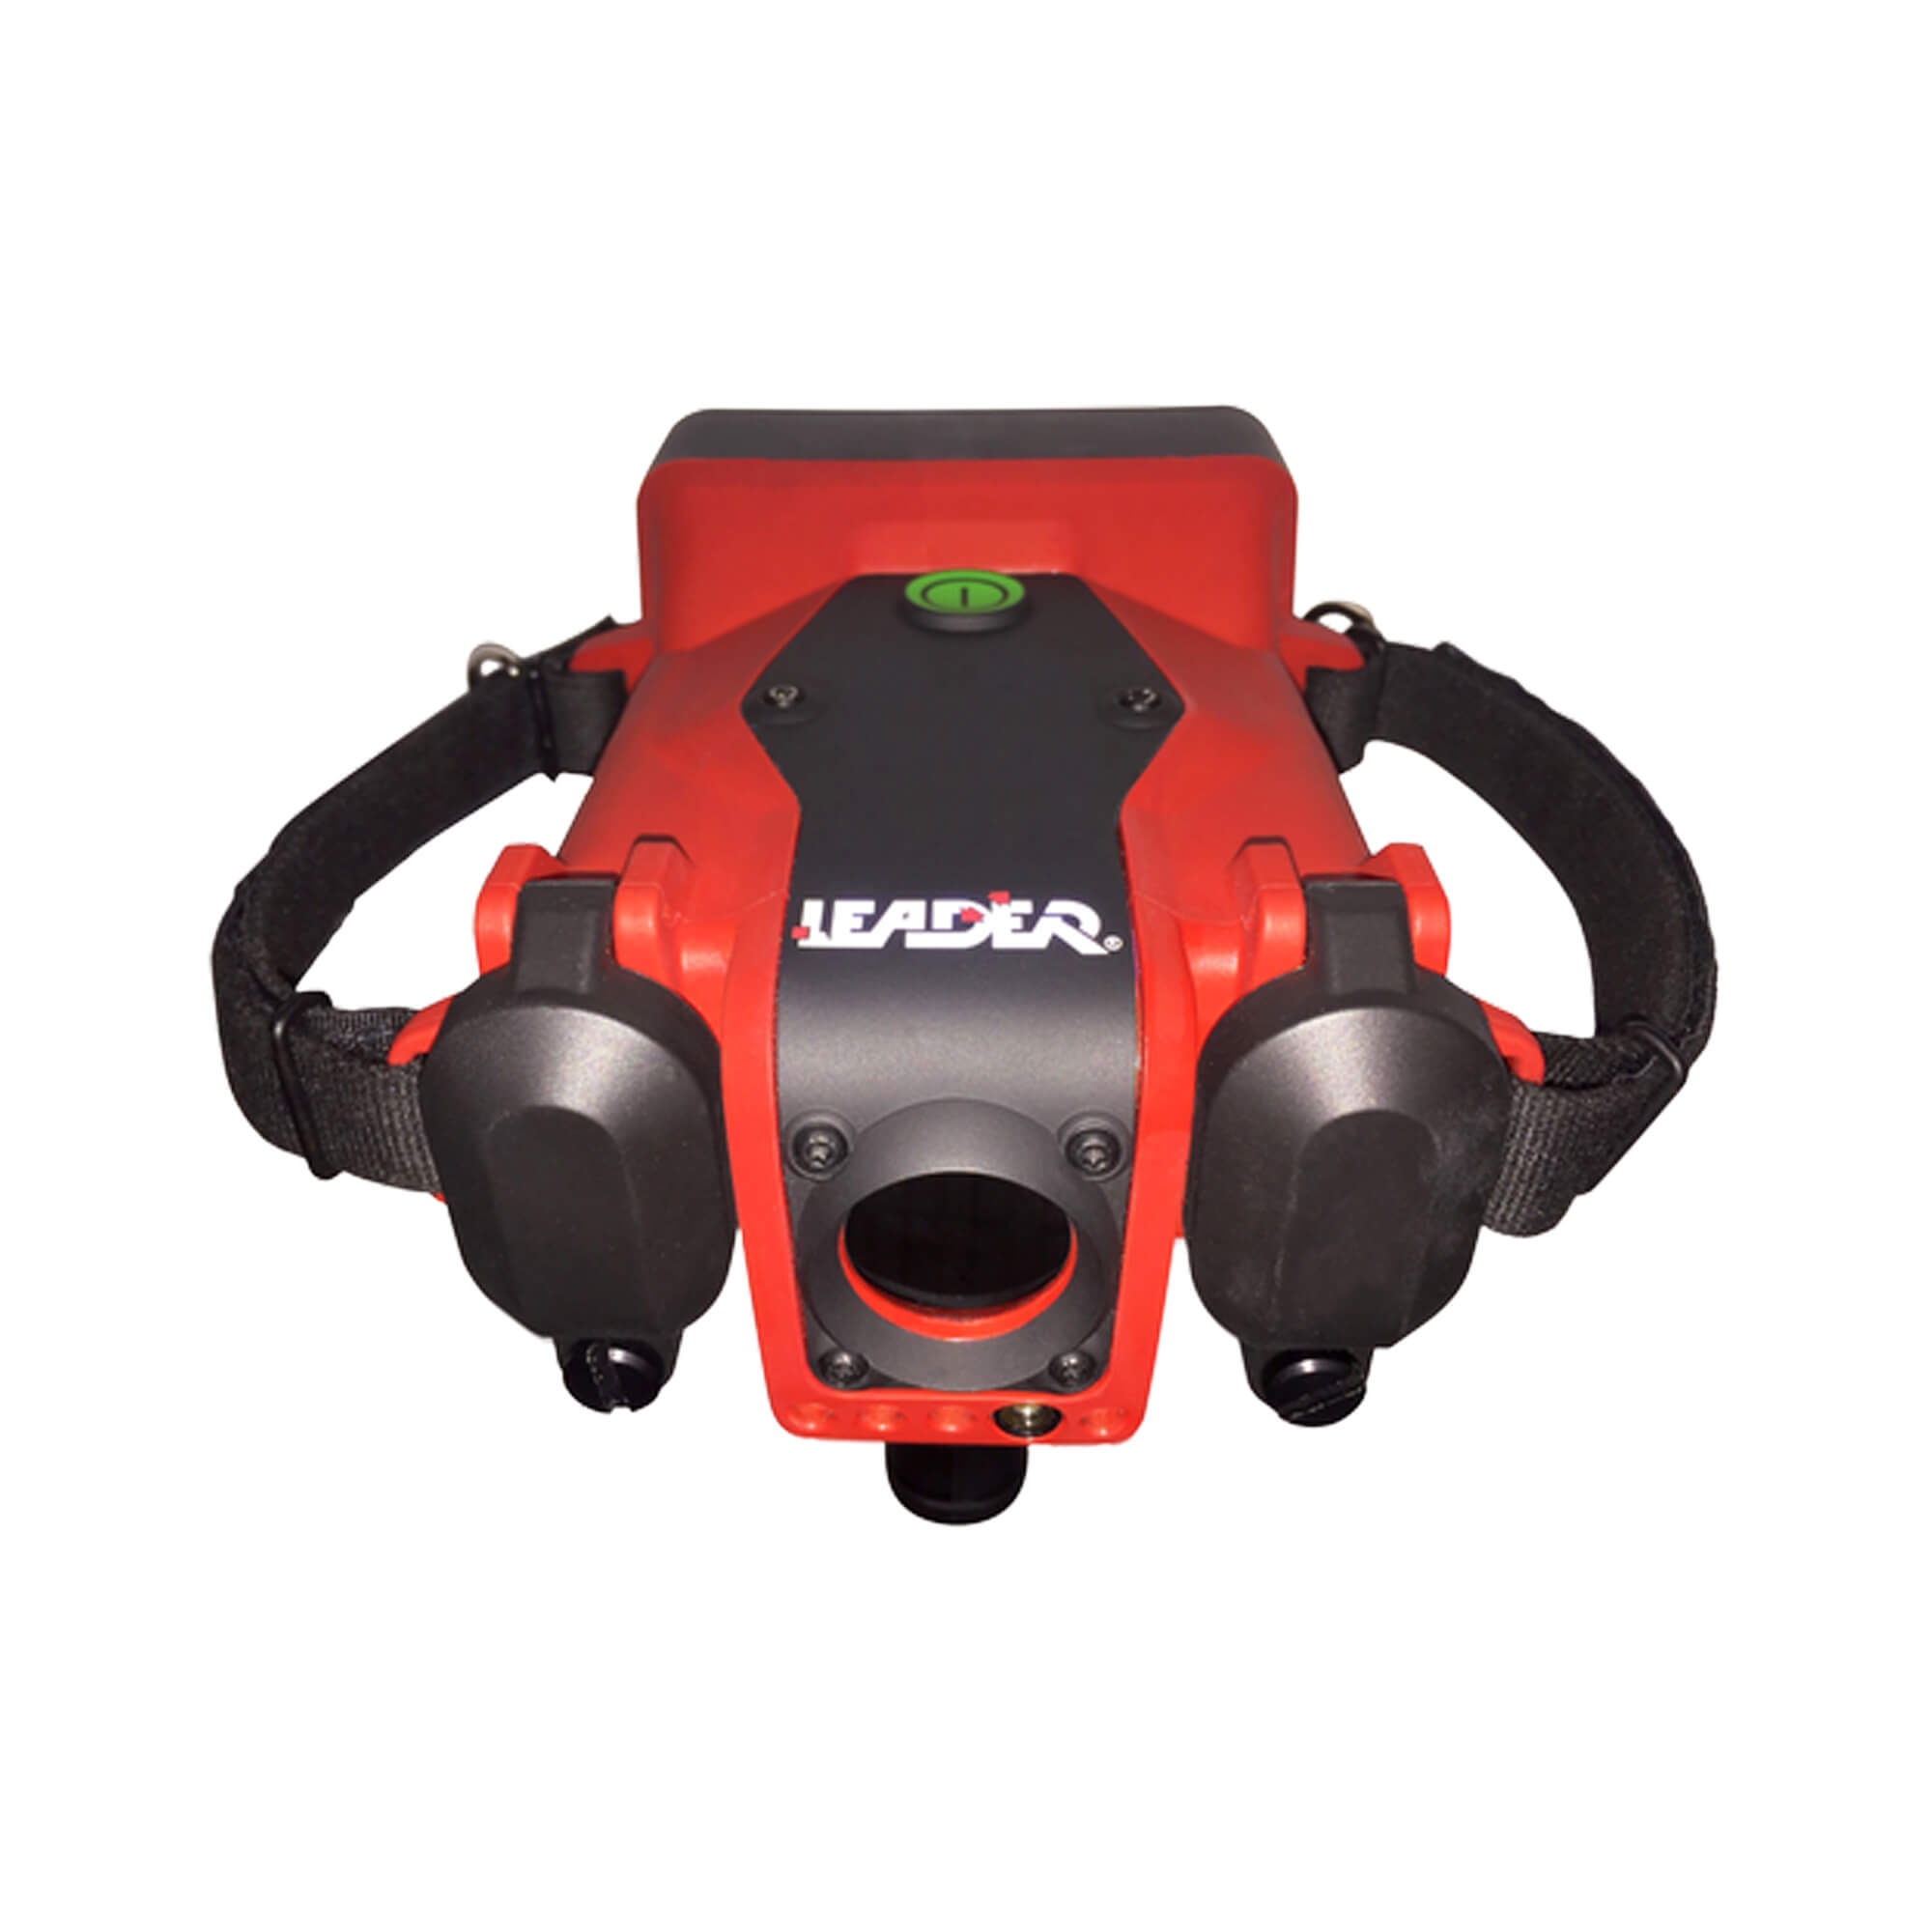 Vatrogasna termalna kamera Leader TIC 4.1